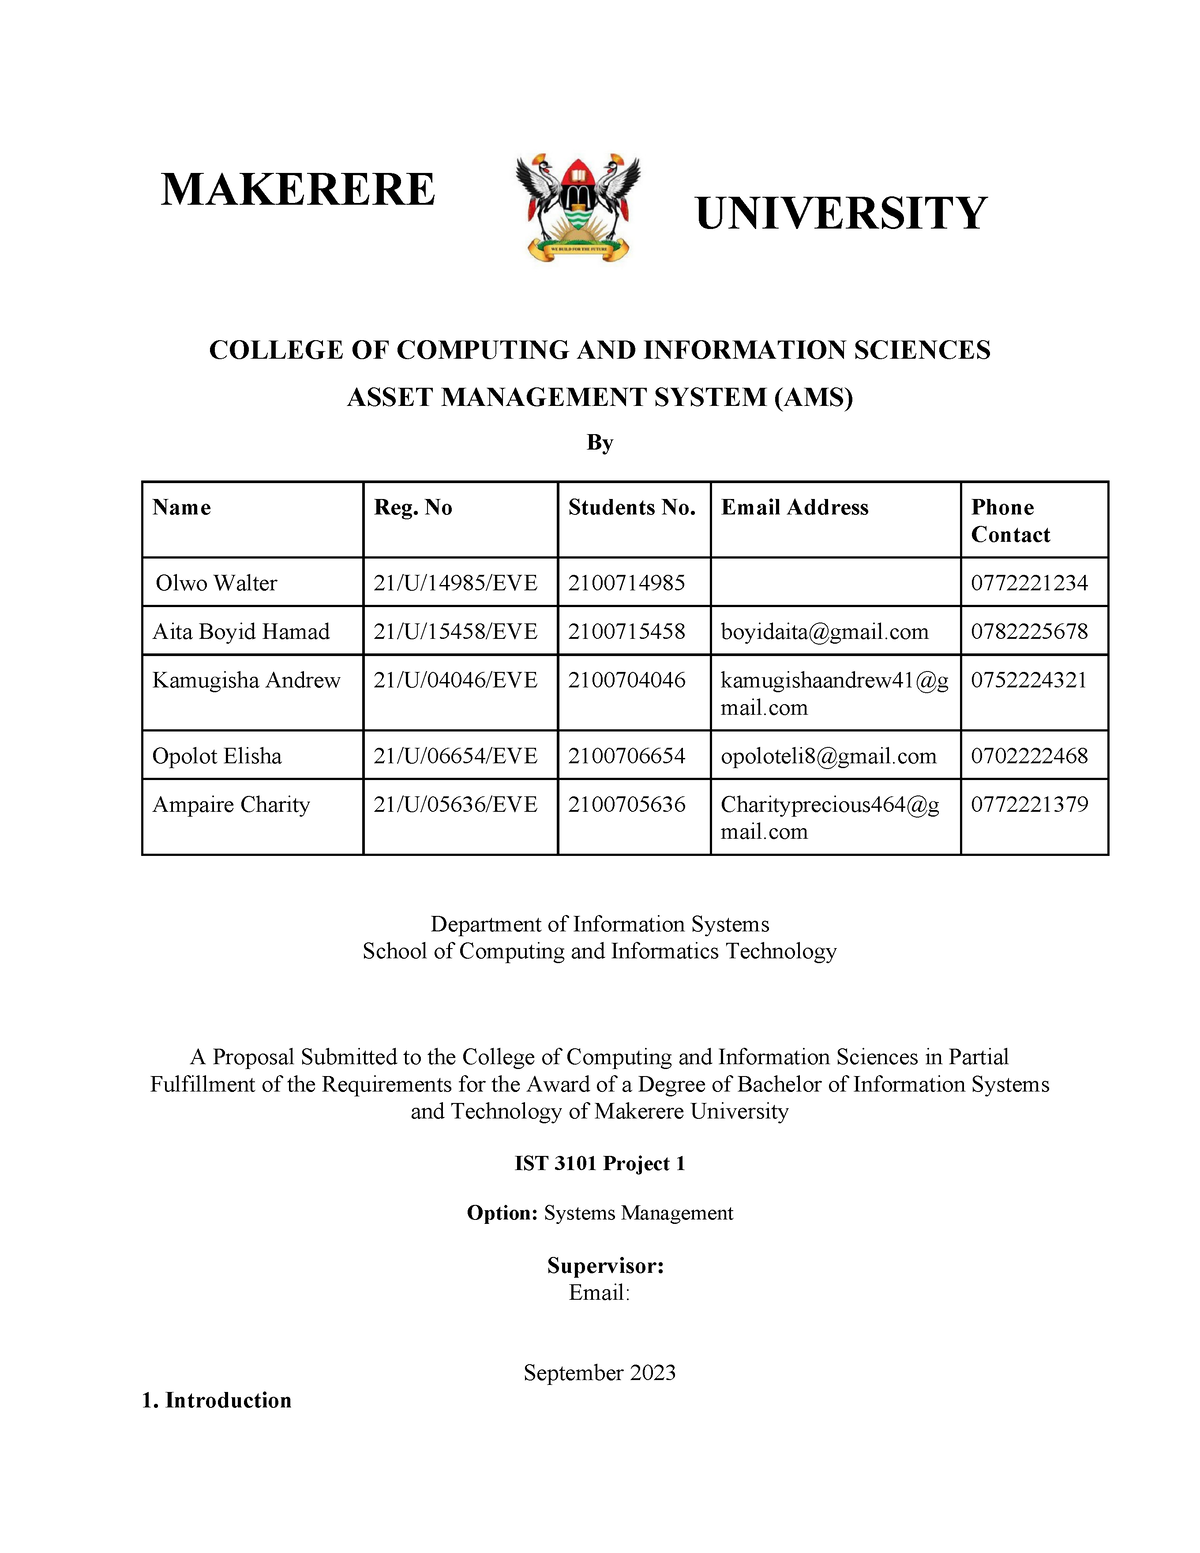 phd concept paper makerere university